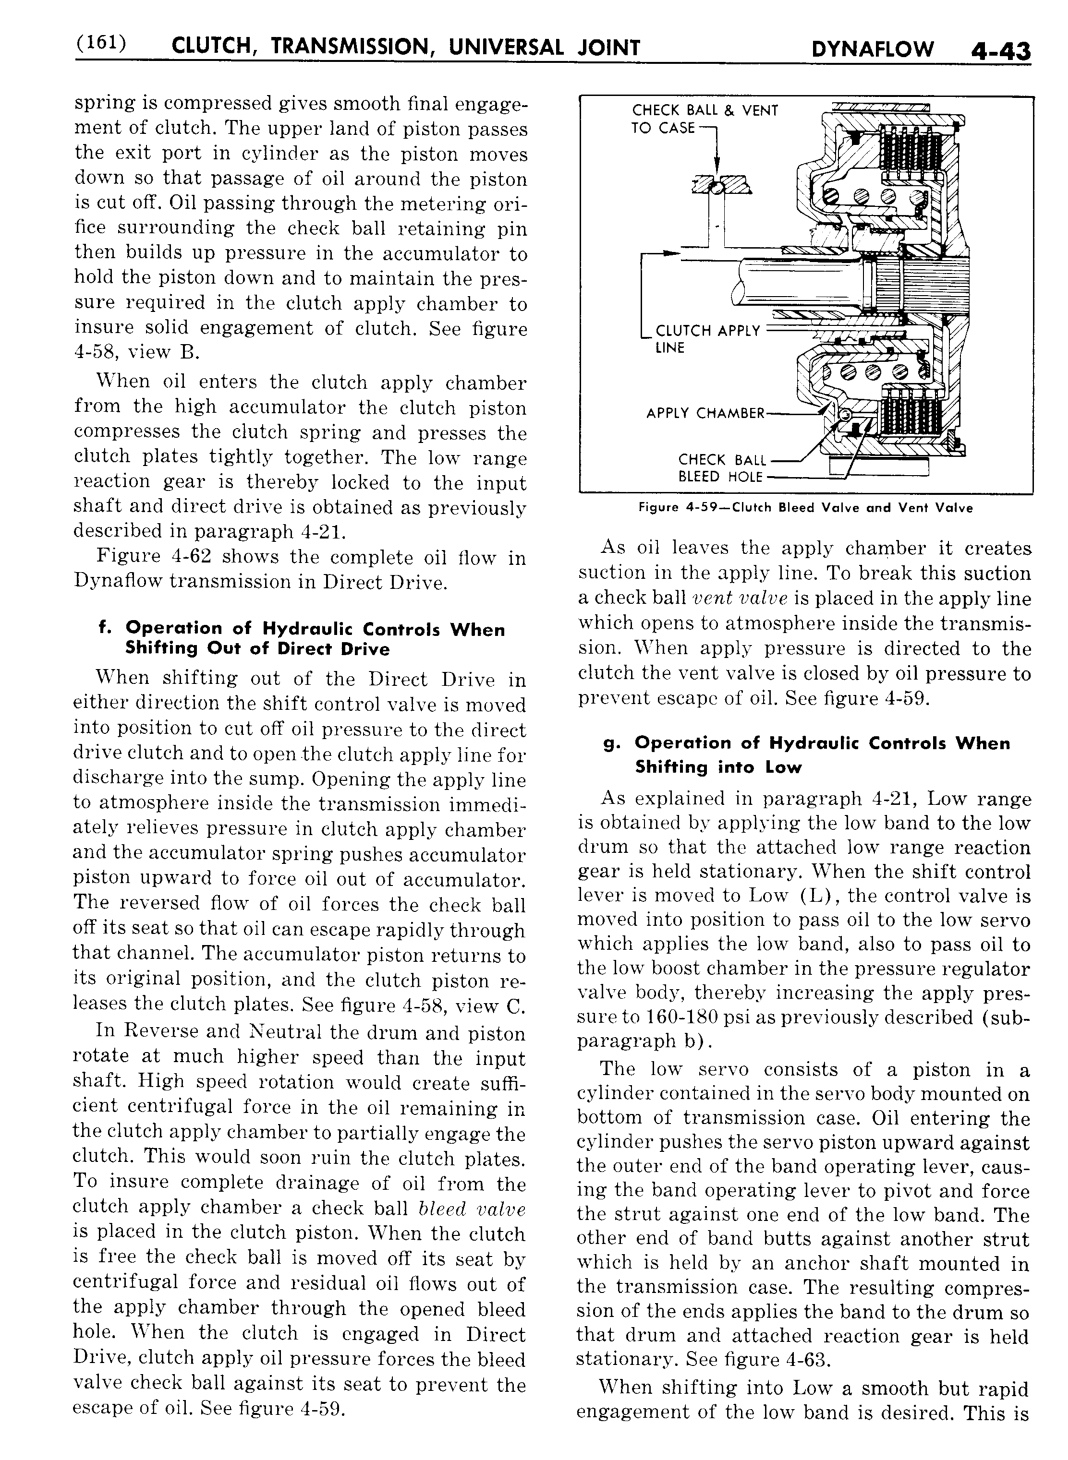 n_05 1951 Buick Shop Manual - Transmission-043-043.jpg